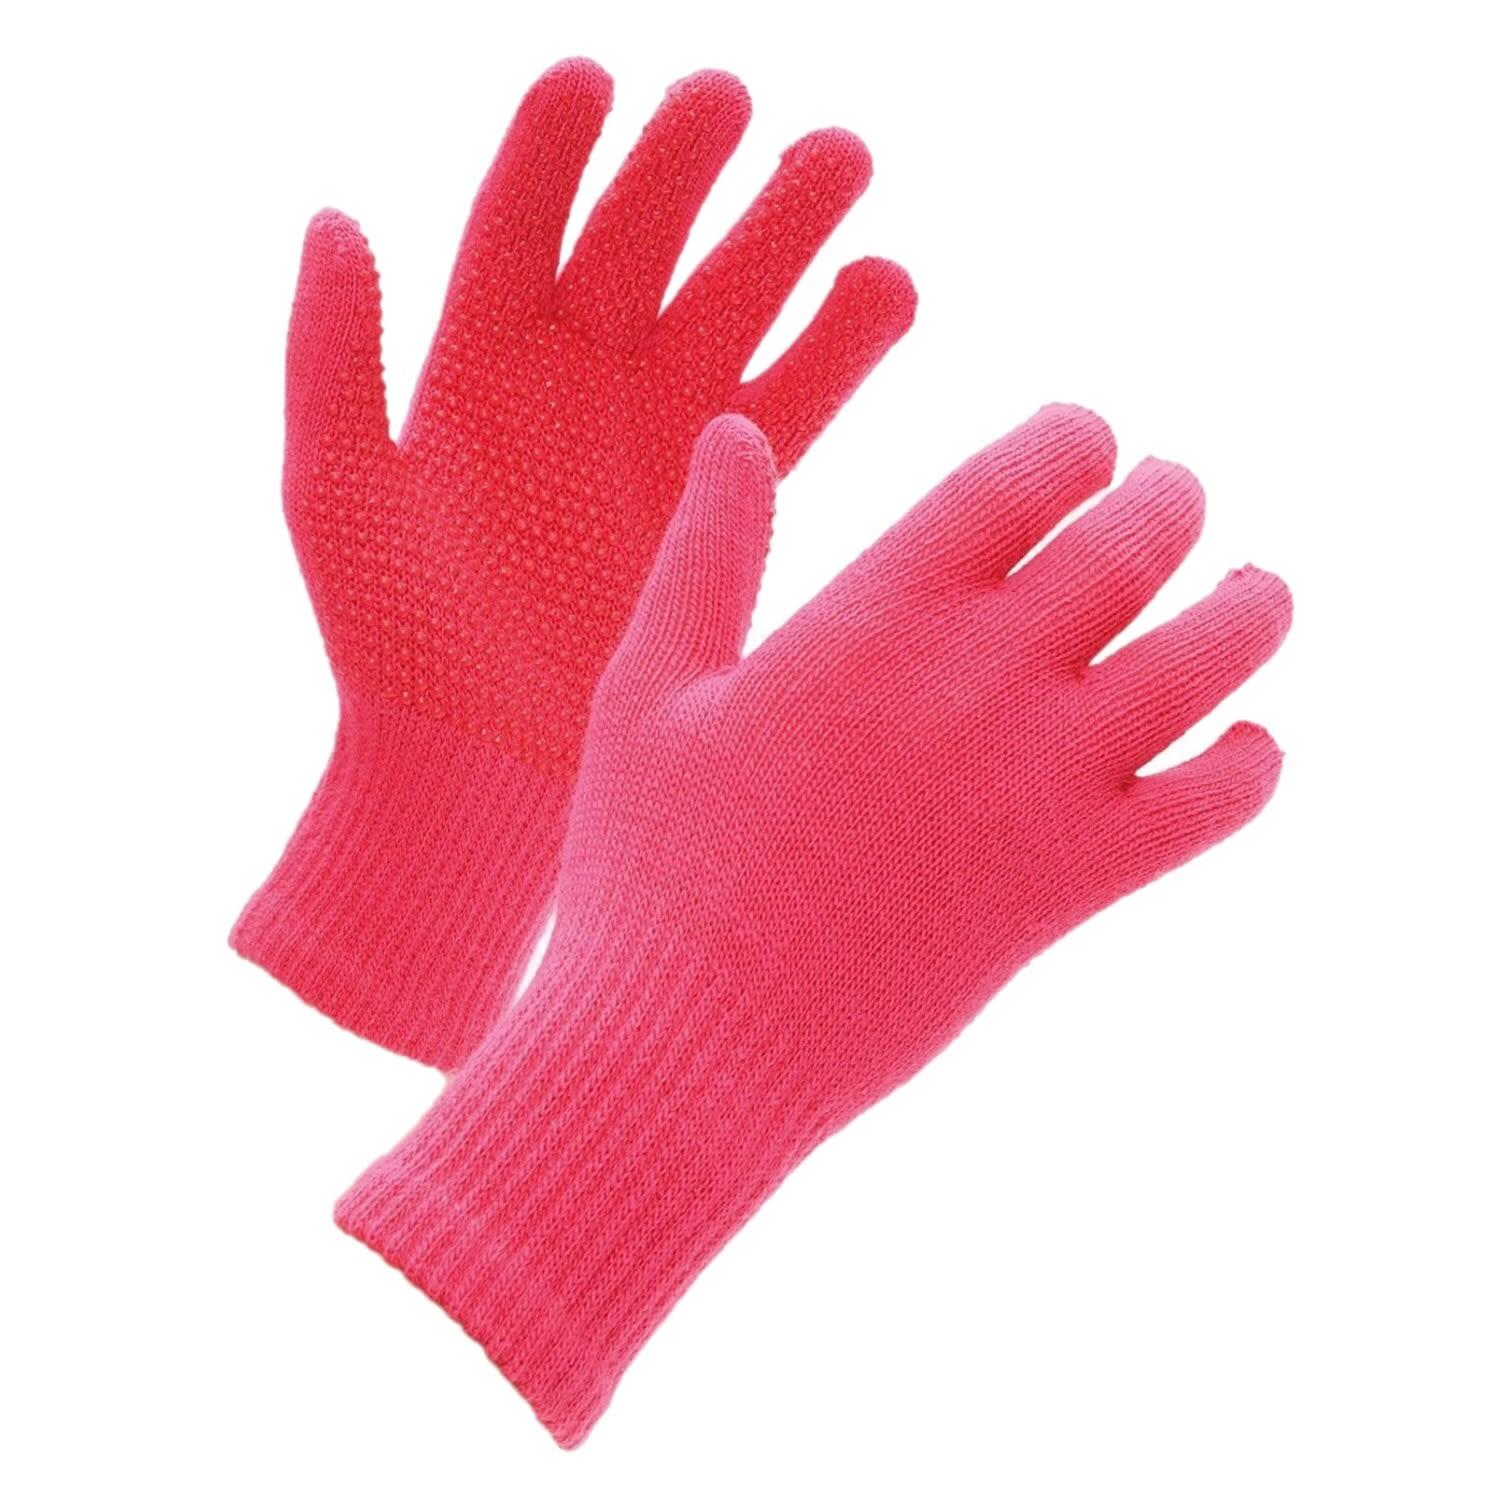 SHIRES Childrens/Kids Suregrip Riding Gloves (Pink)